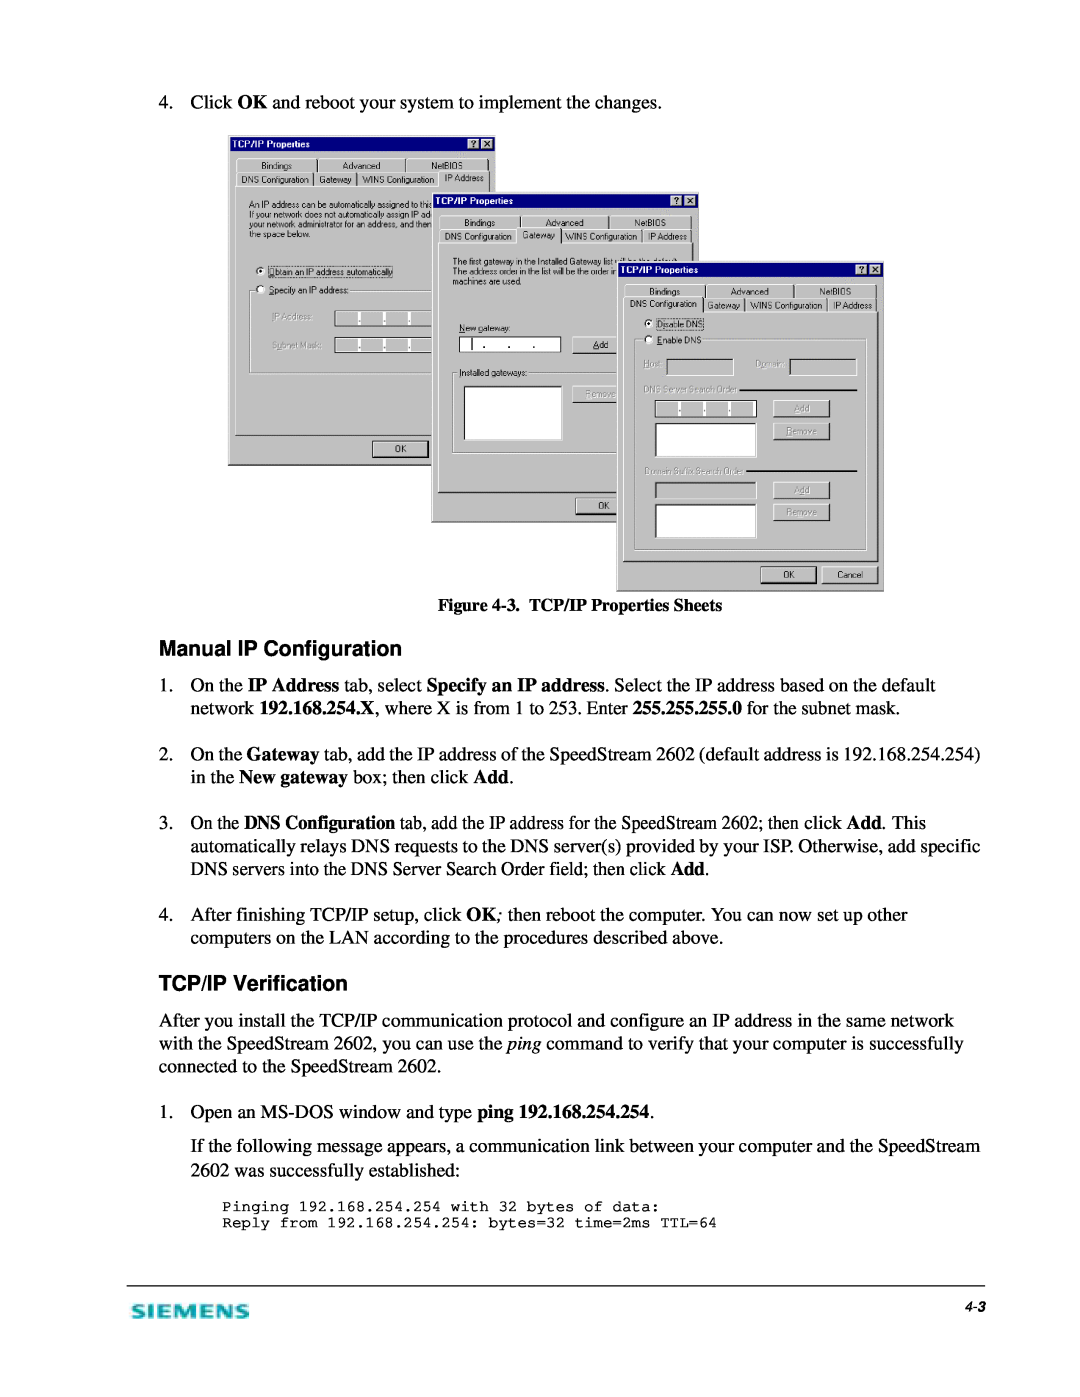 Siemens 2602 manual Manual IP Configuration, TCP/IP Verification 